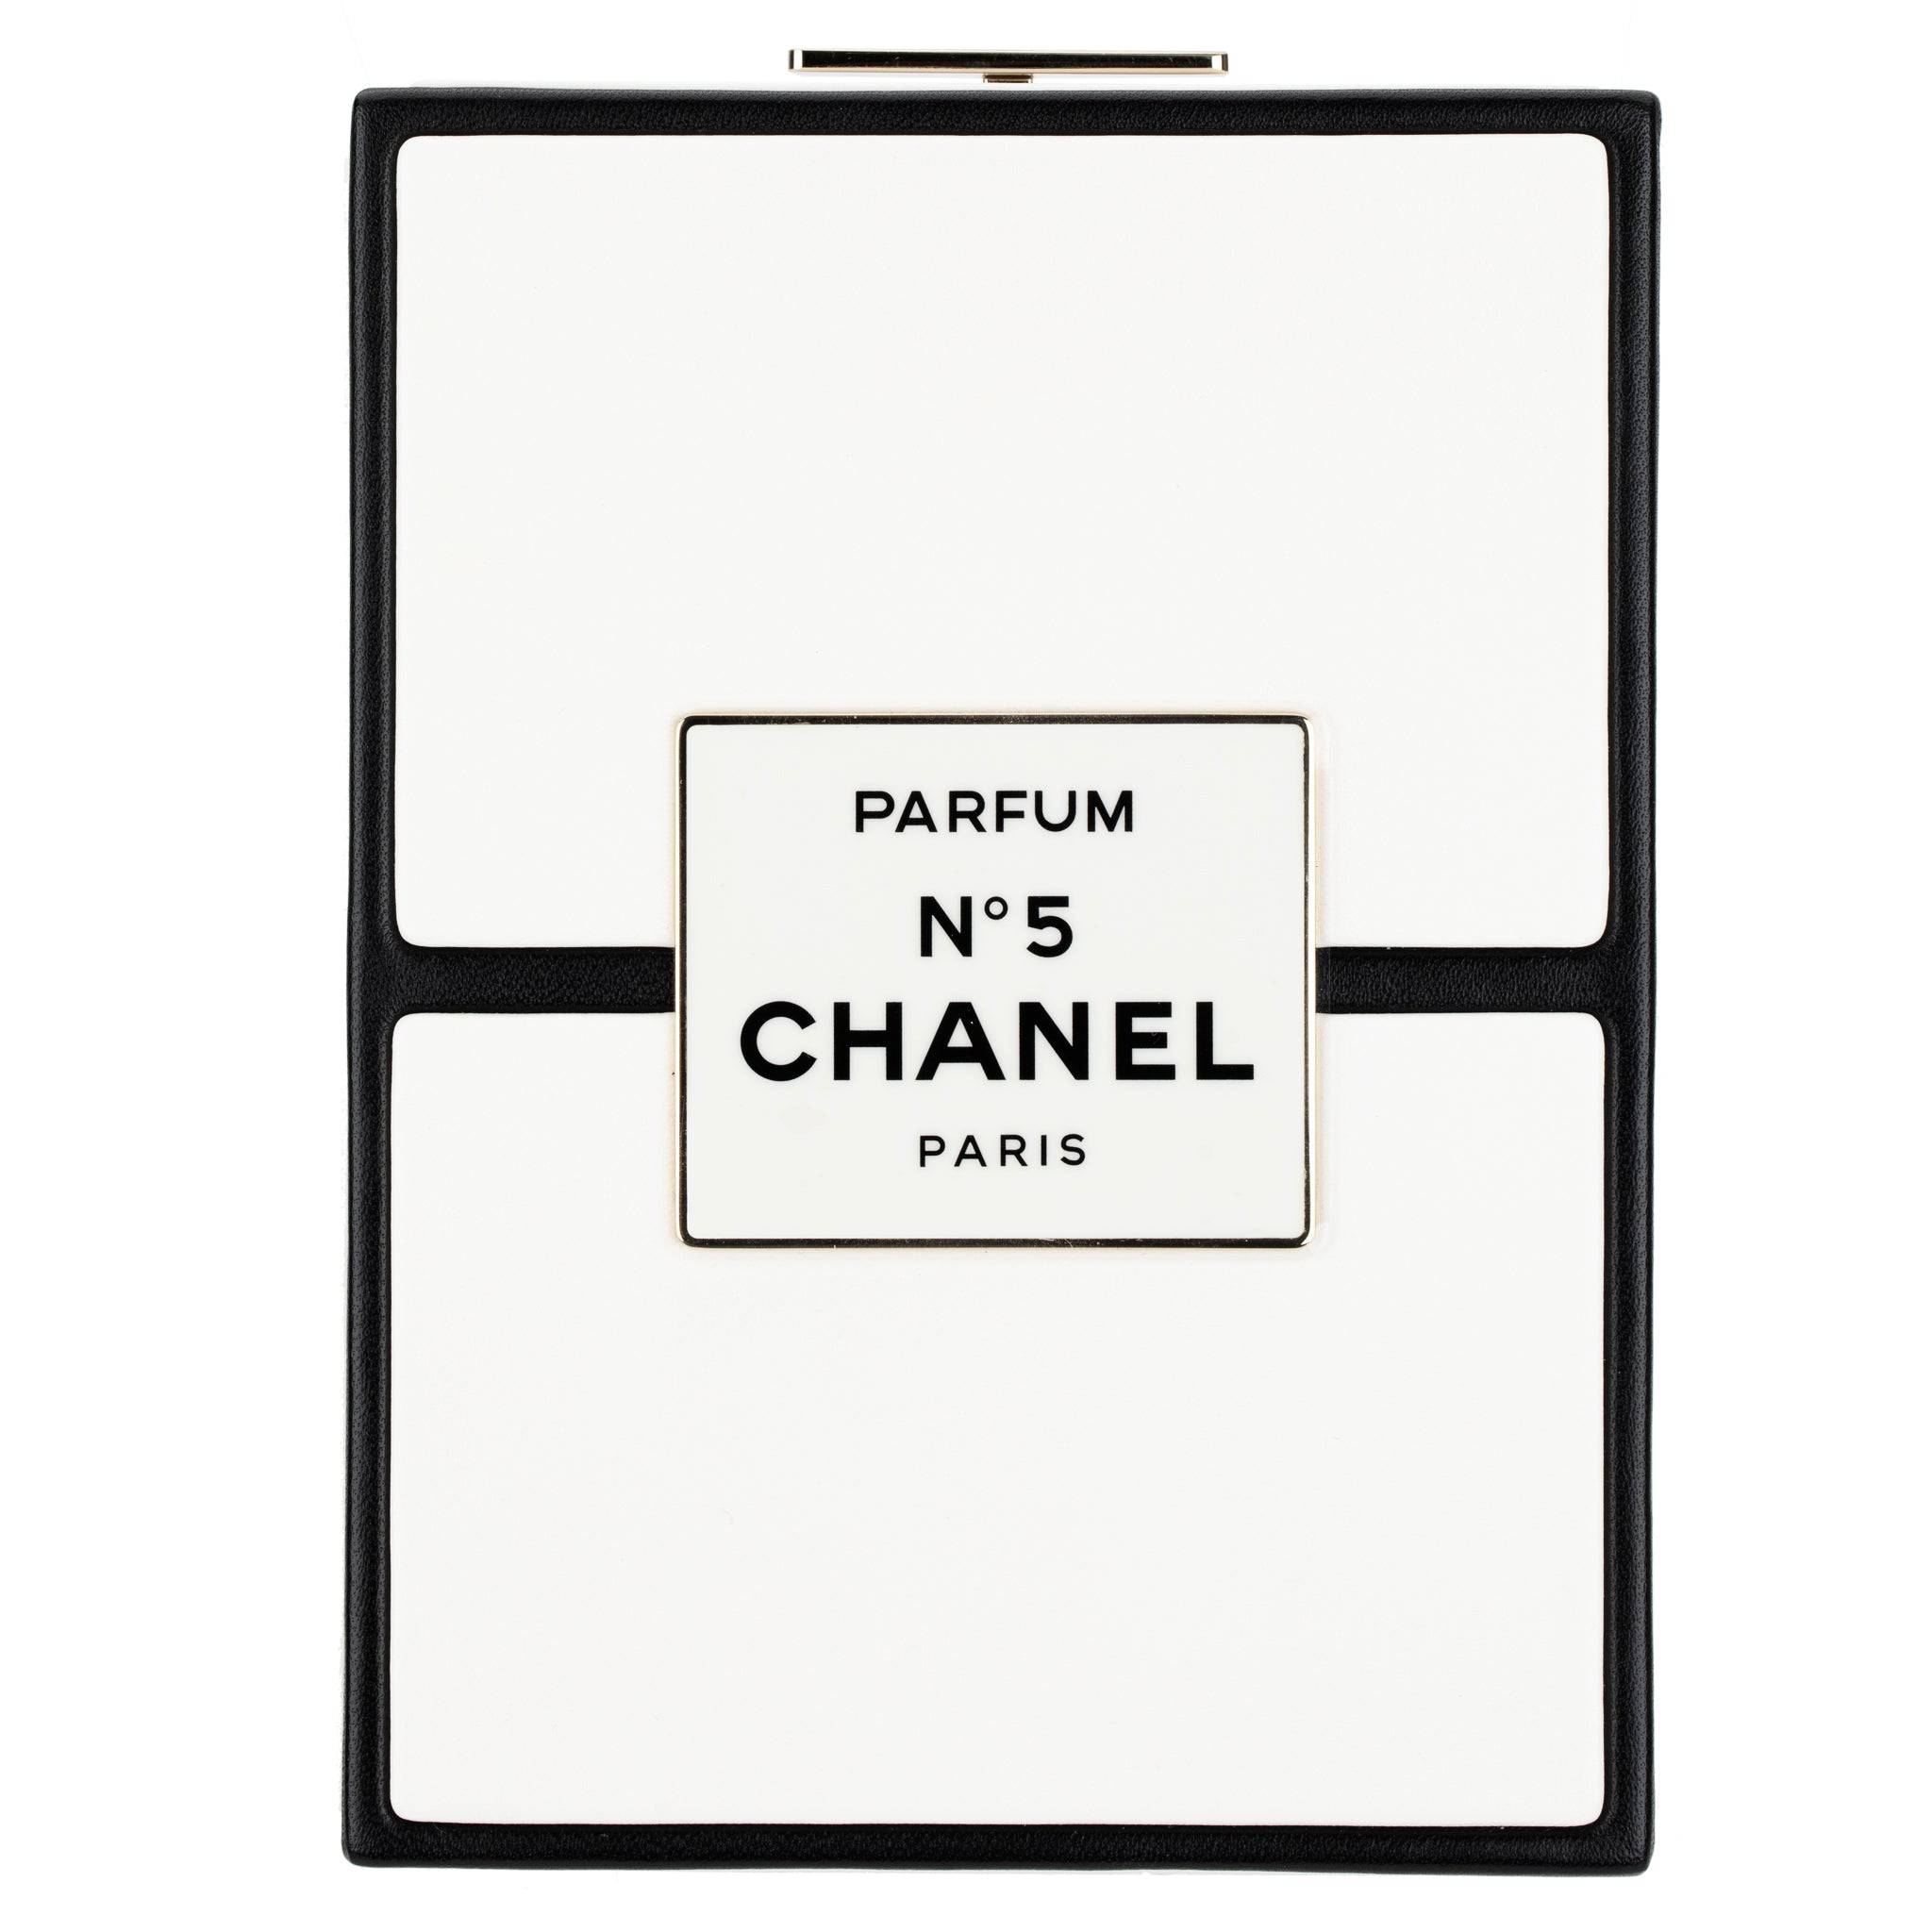 CHANEL MINAUDIÈRE LIMITED EDITION WHITE & BLACK CHANEL NO.5 PERFUME BOX GOLD-TONE HARDWARE - On Repeat